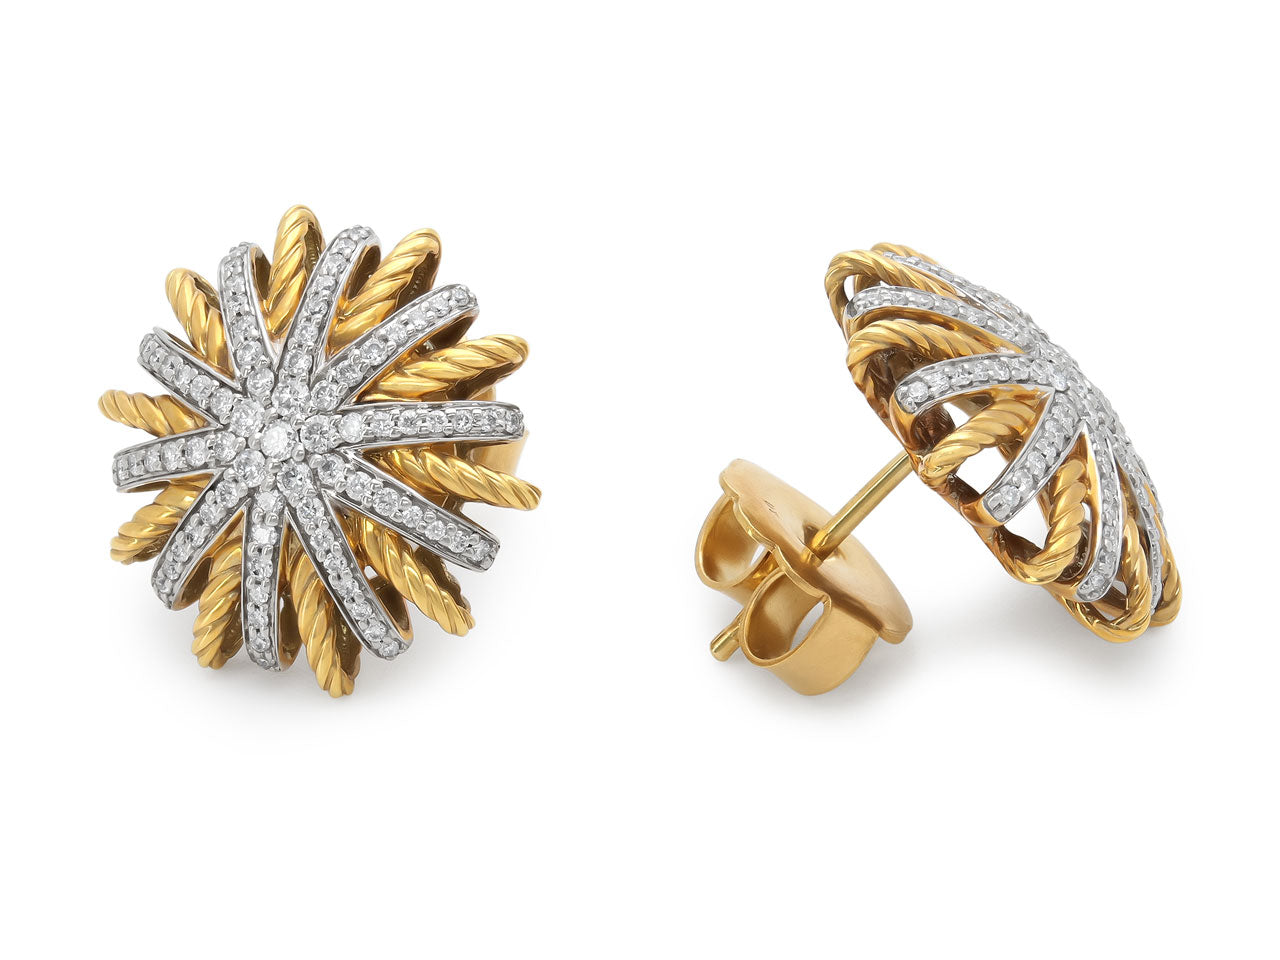 David Yurman 'Starburst' Diamond Earrings in 18K Gold